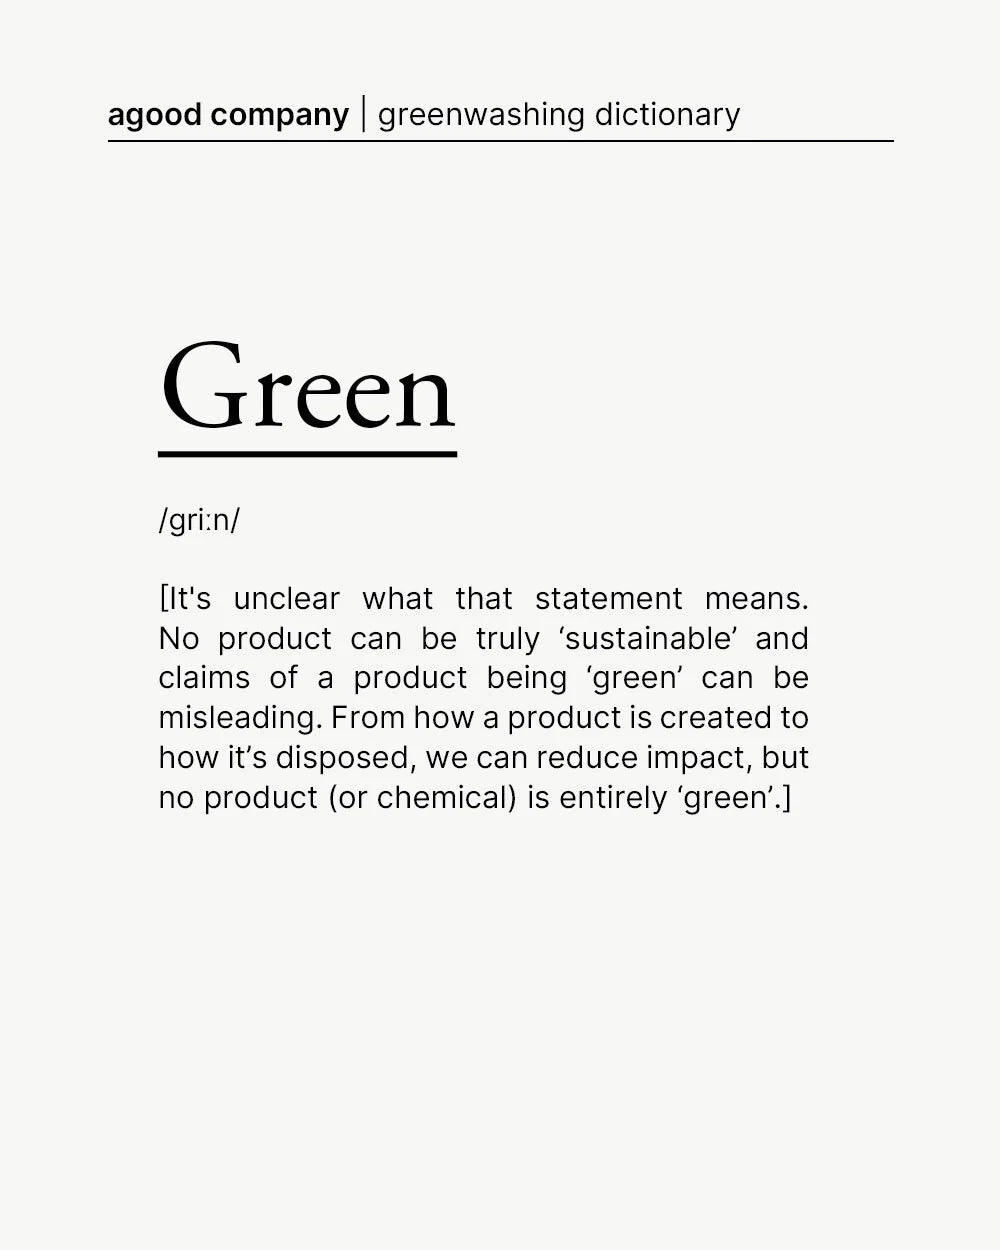 grün - Greenswasing